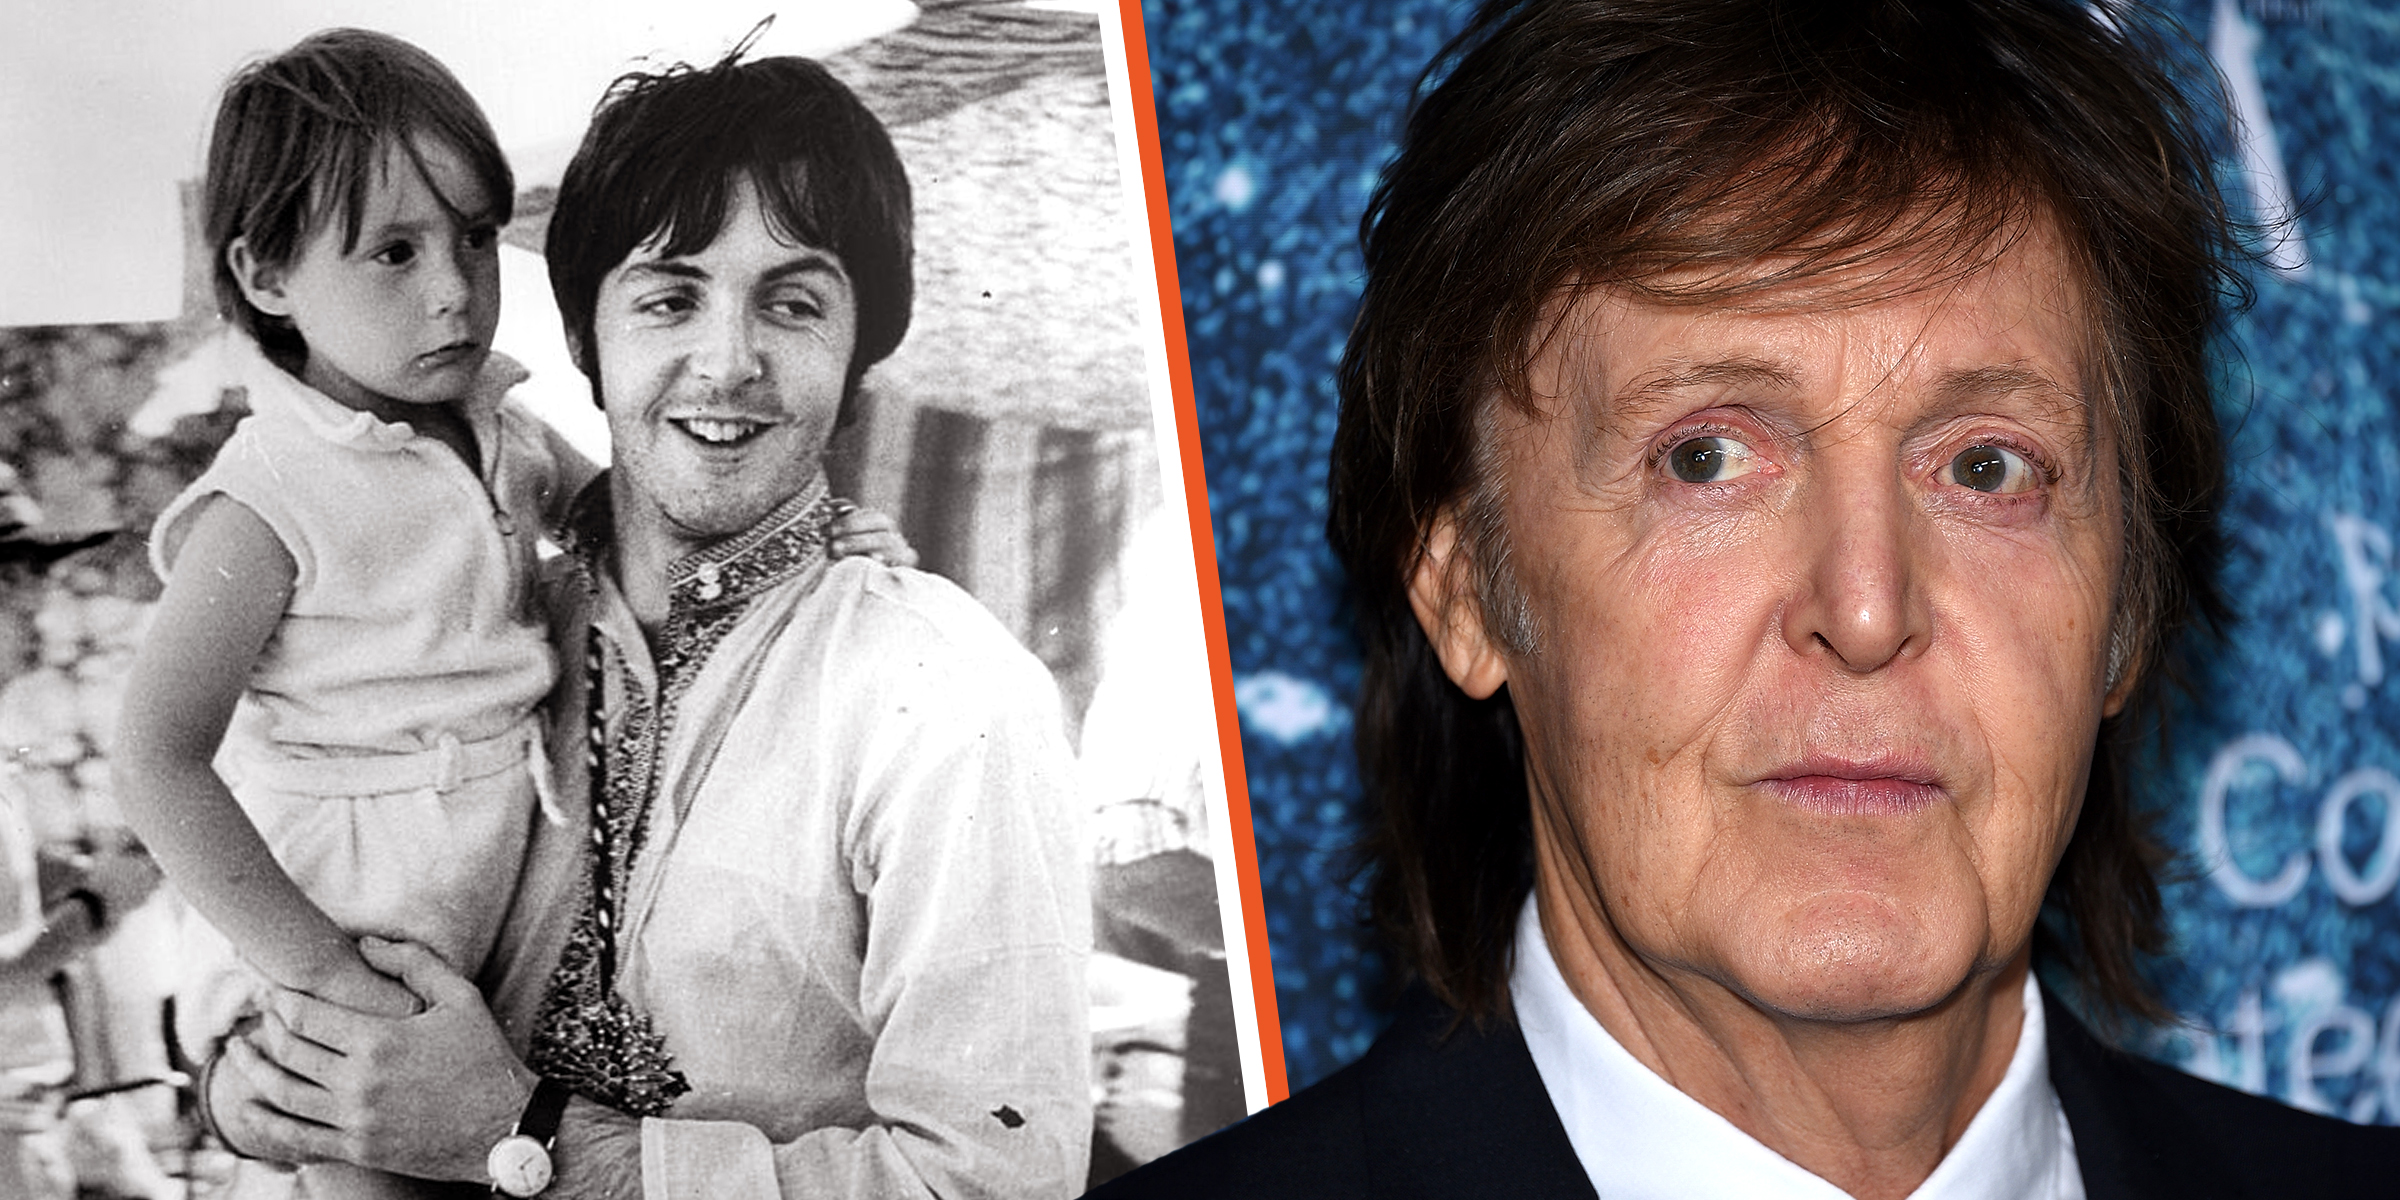 Paul McCartney and Julian Lennon | Paul McCartney | Source: Getty Images